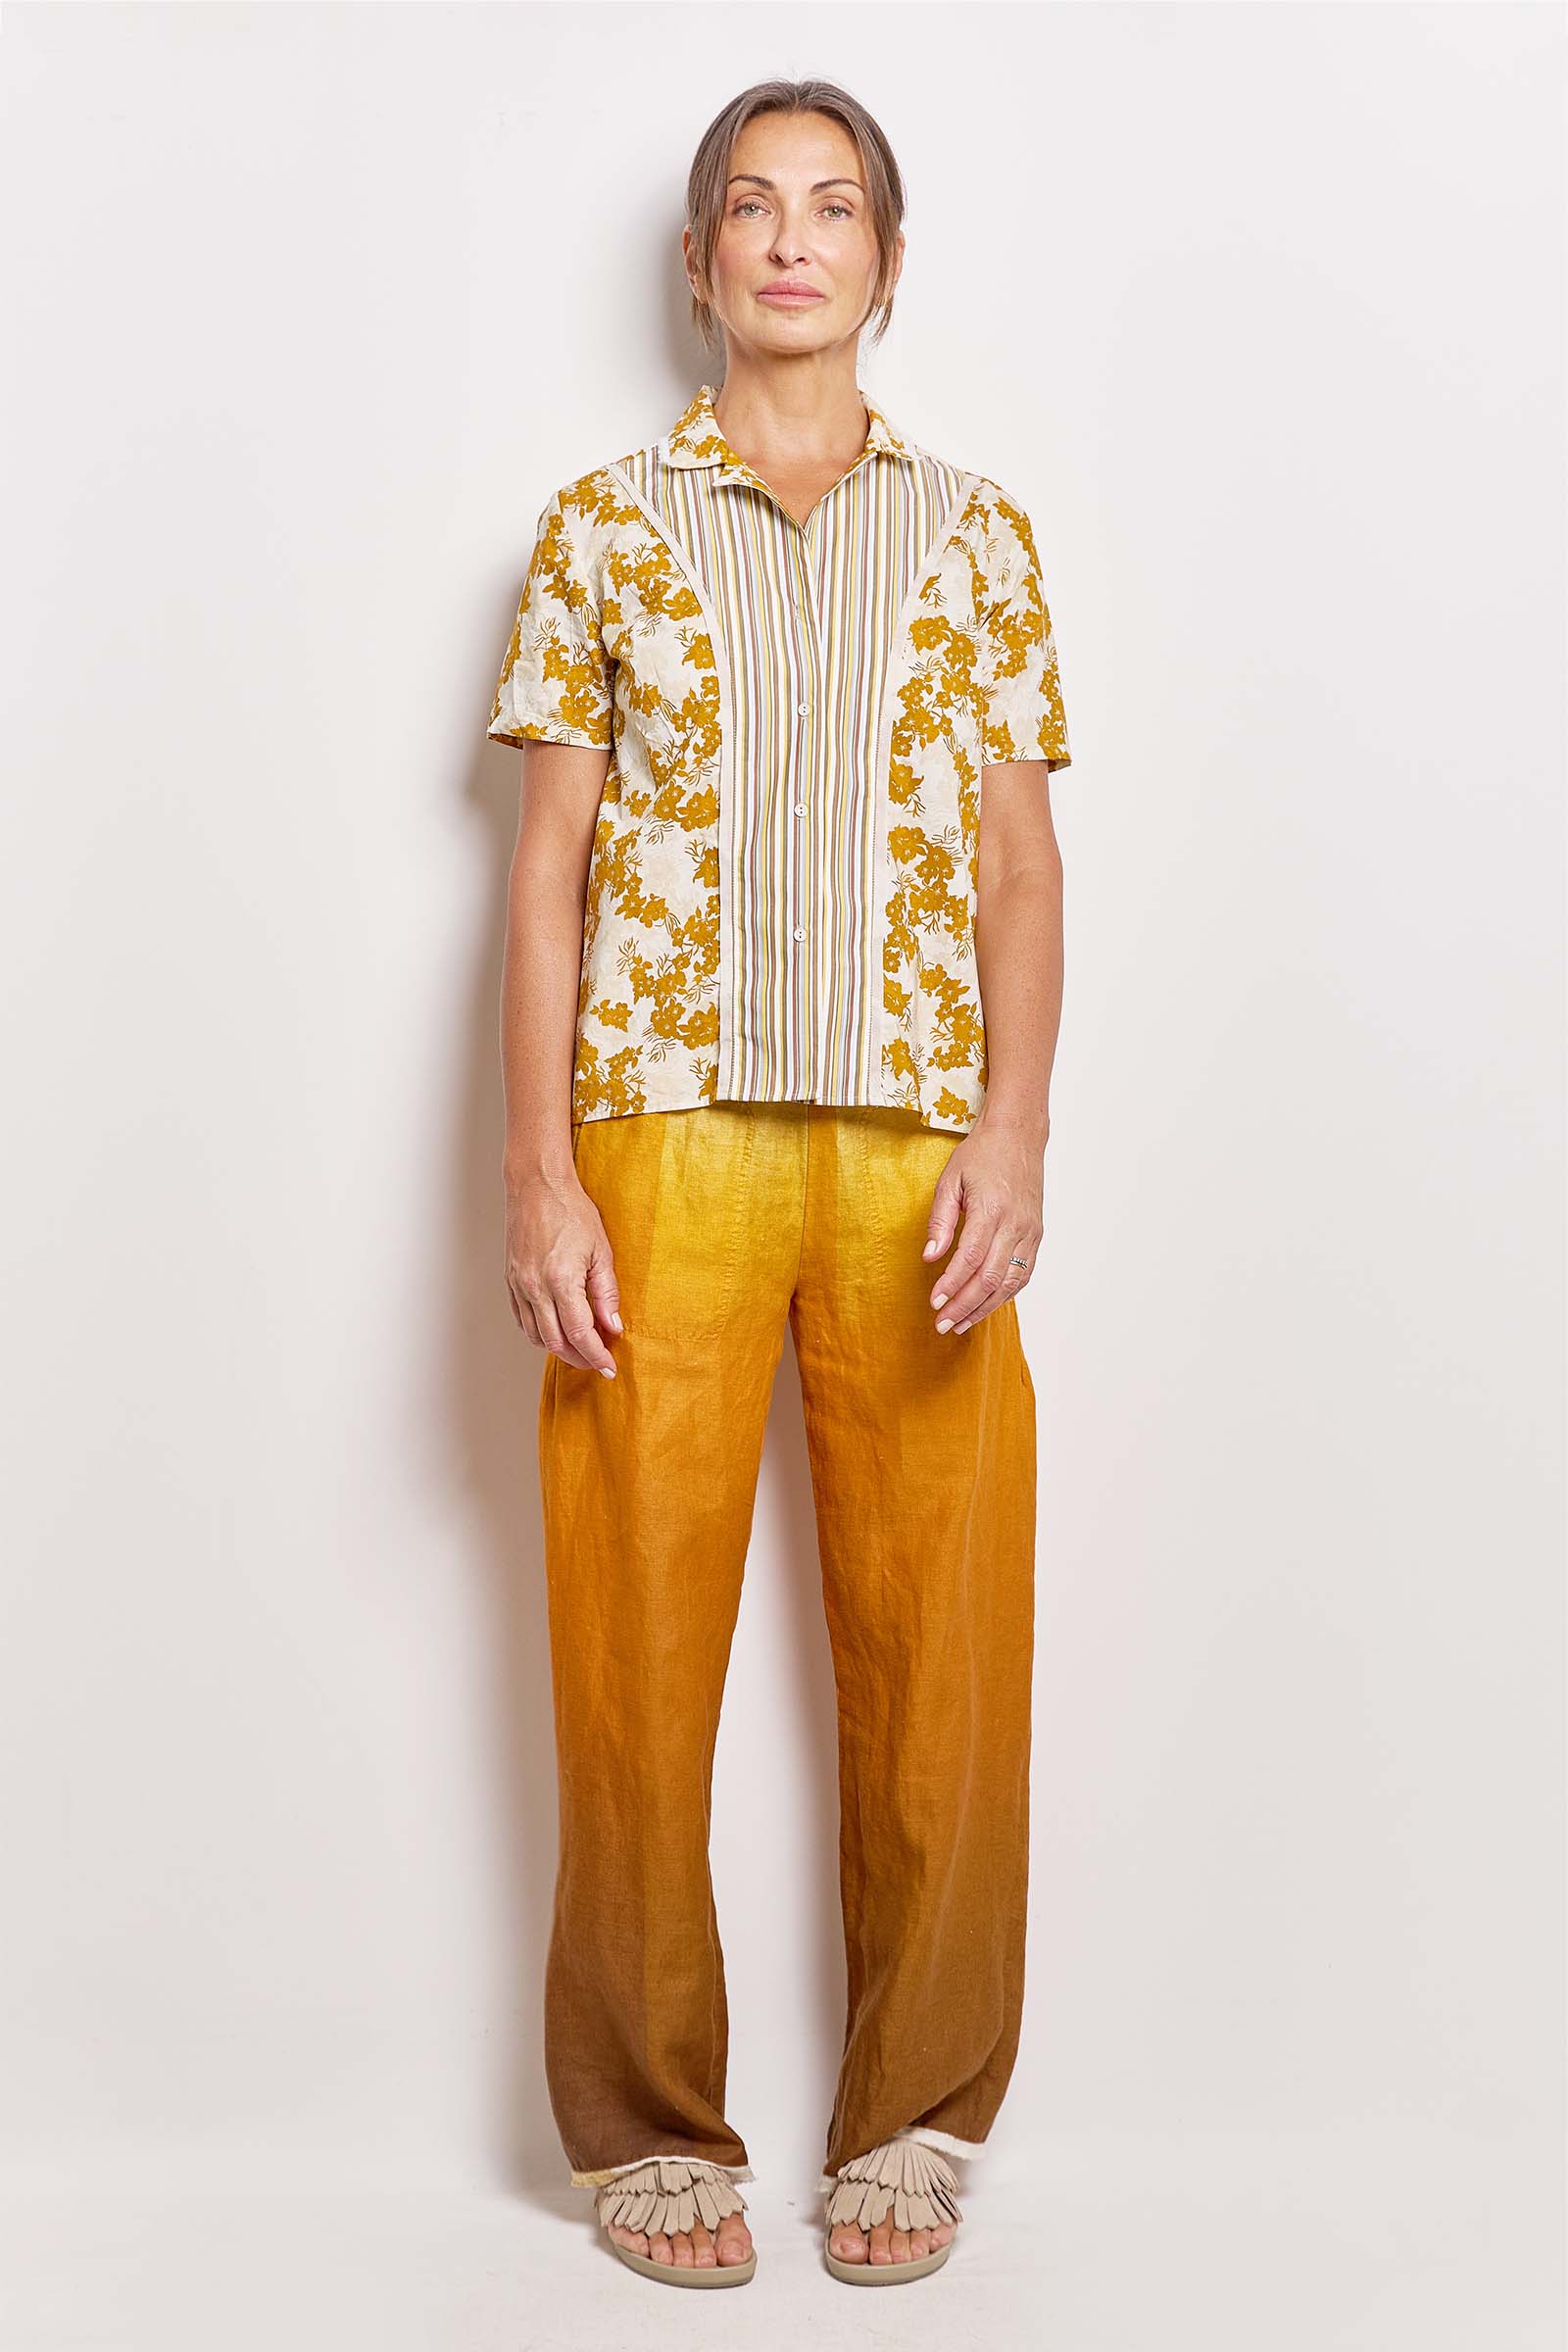 teddy ochre floral cotton shirt.